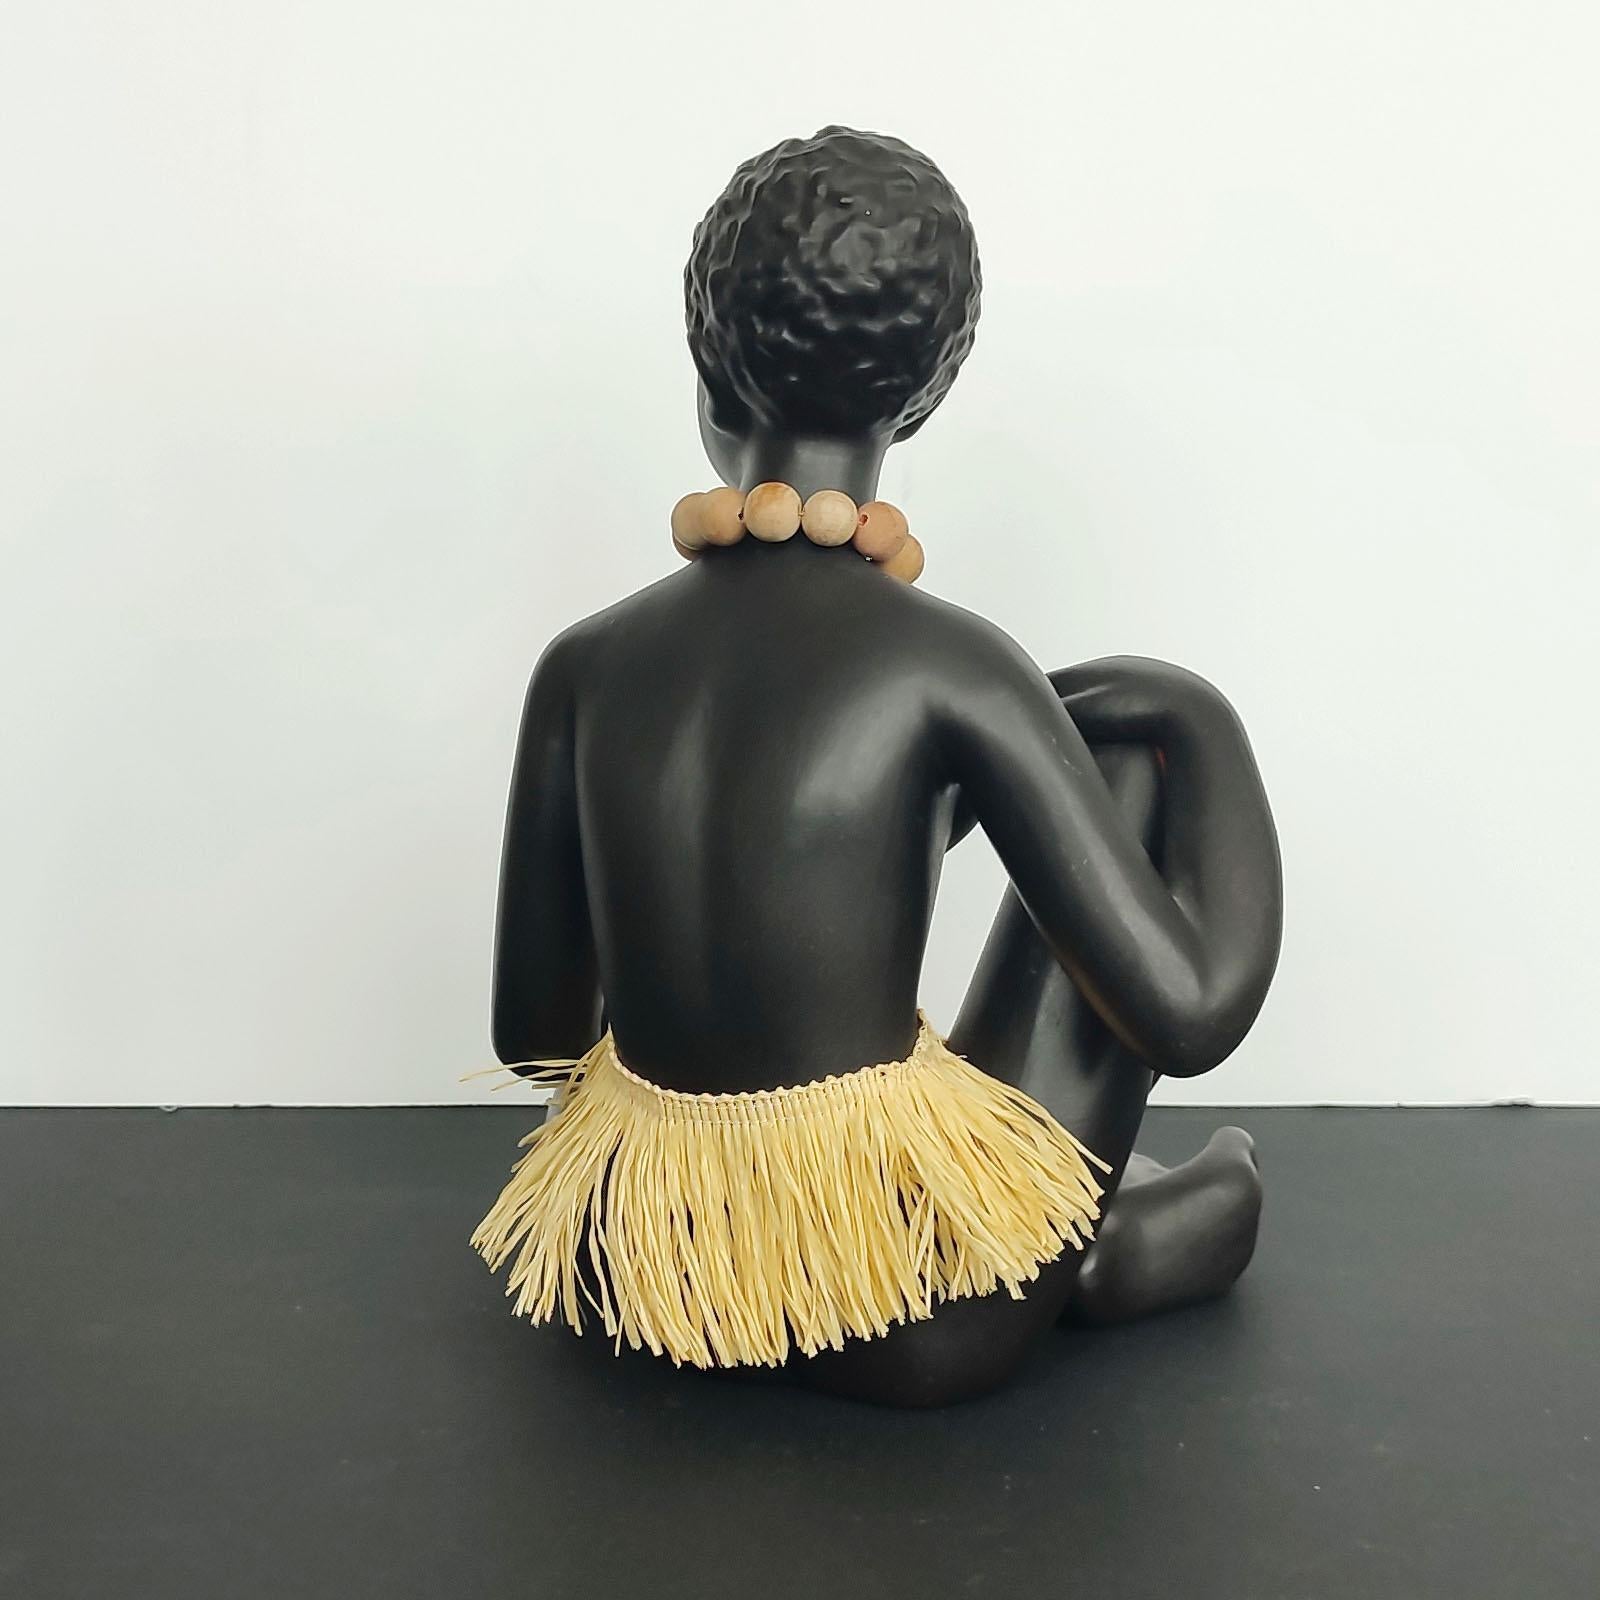 collectible black figurines